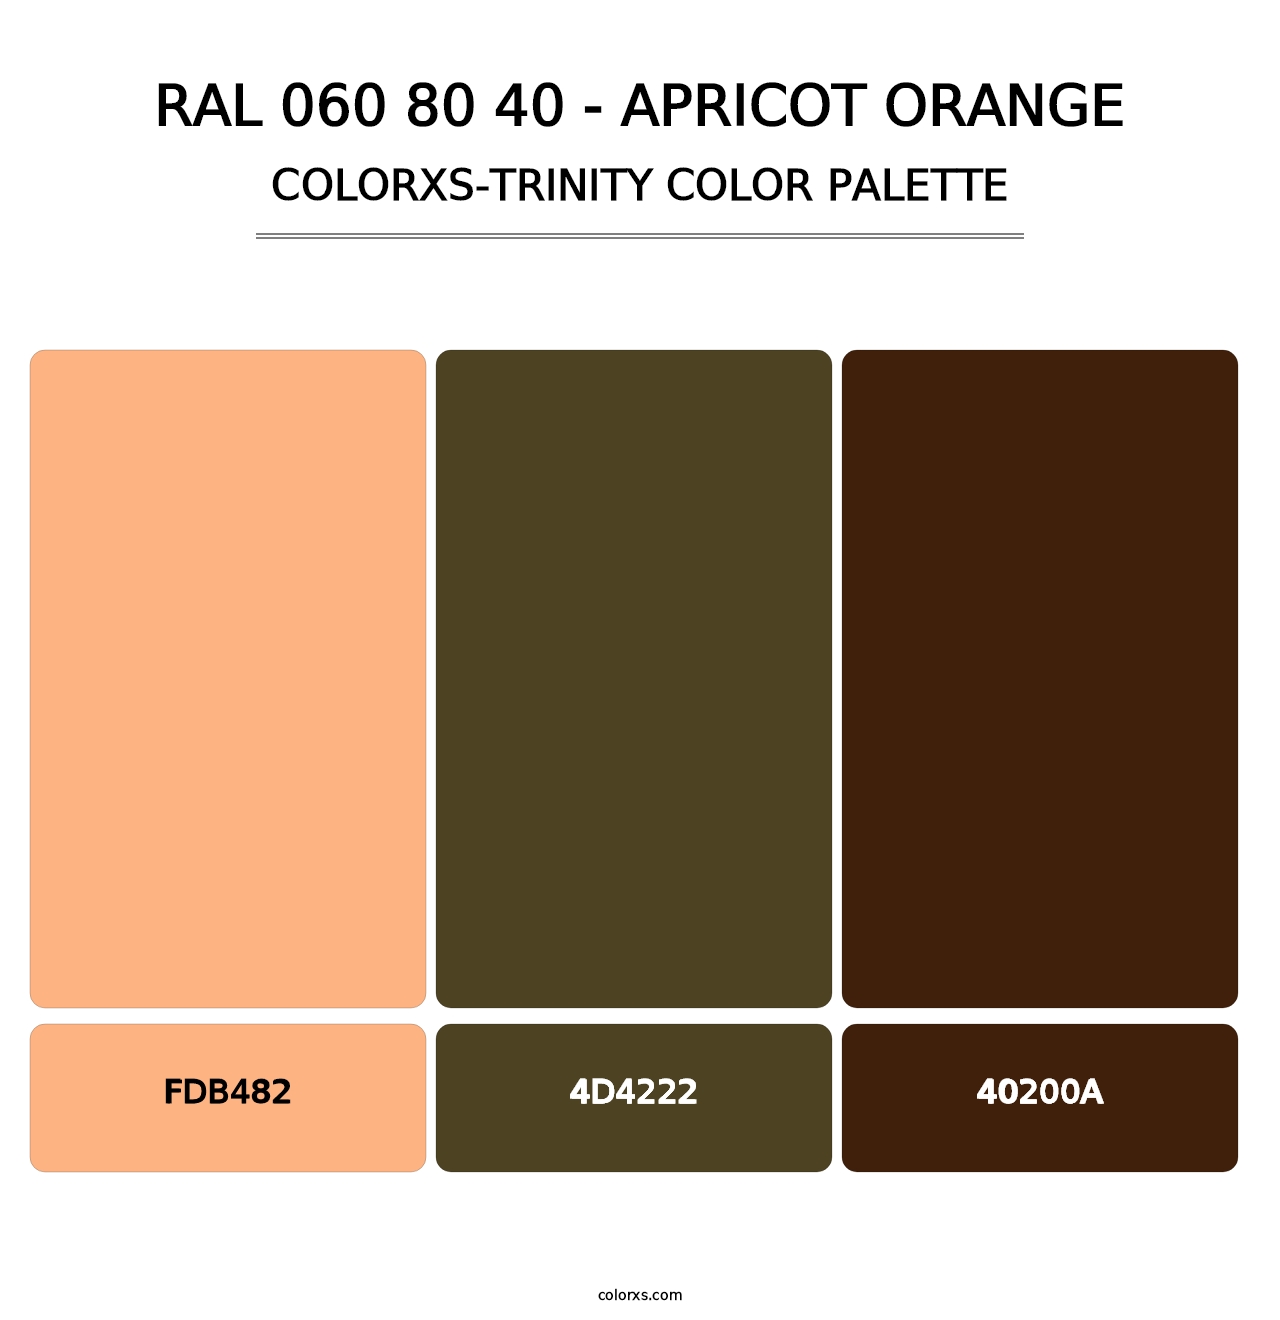 RAL 060 80 40 - Apricot Orange - Colorxs Trinity Palette